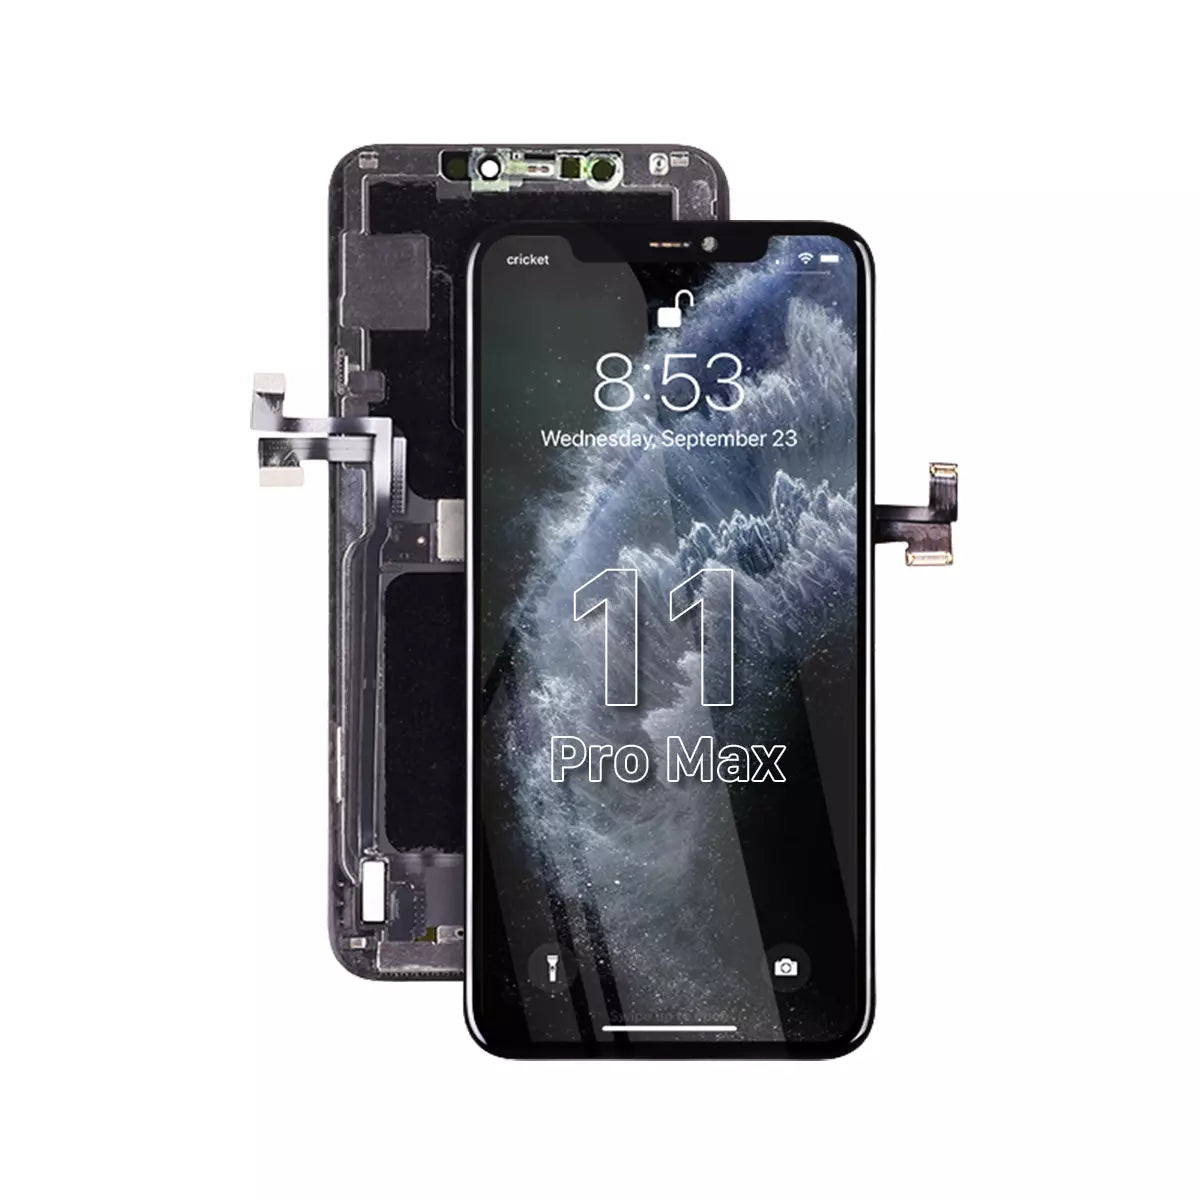 Incell-pantalla OLED para iPhone 11, 11 Pro Max, 12, 13, montaje